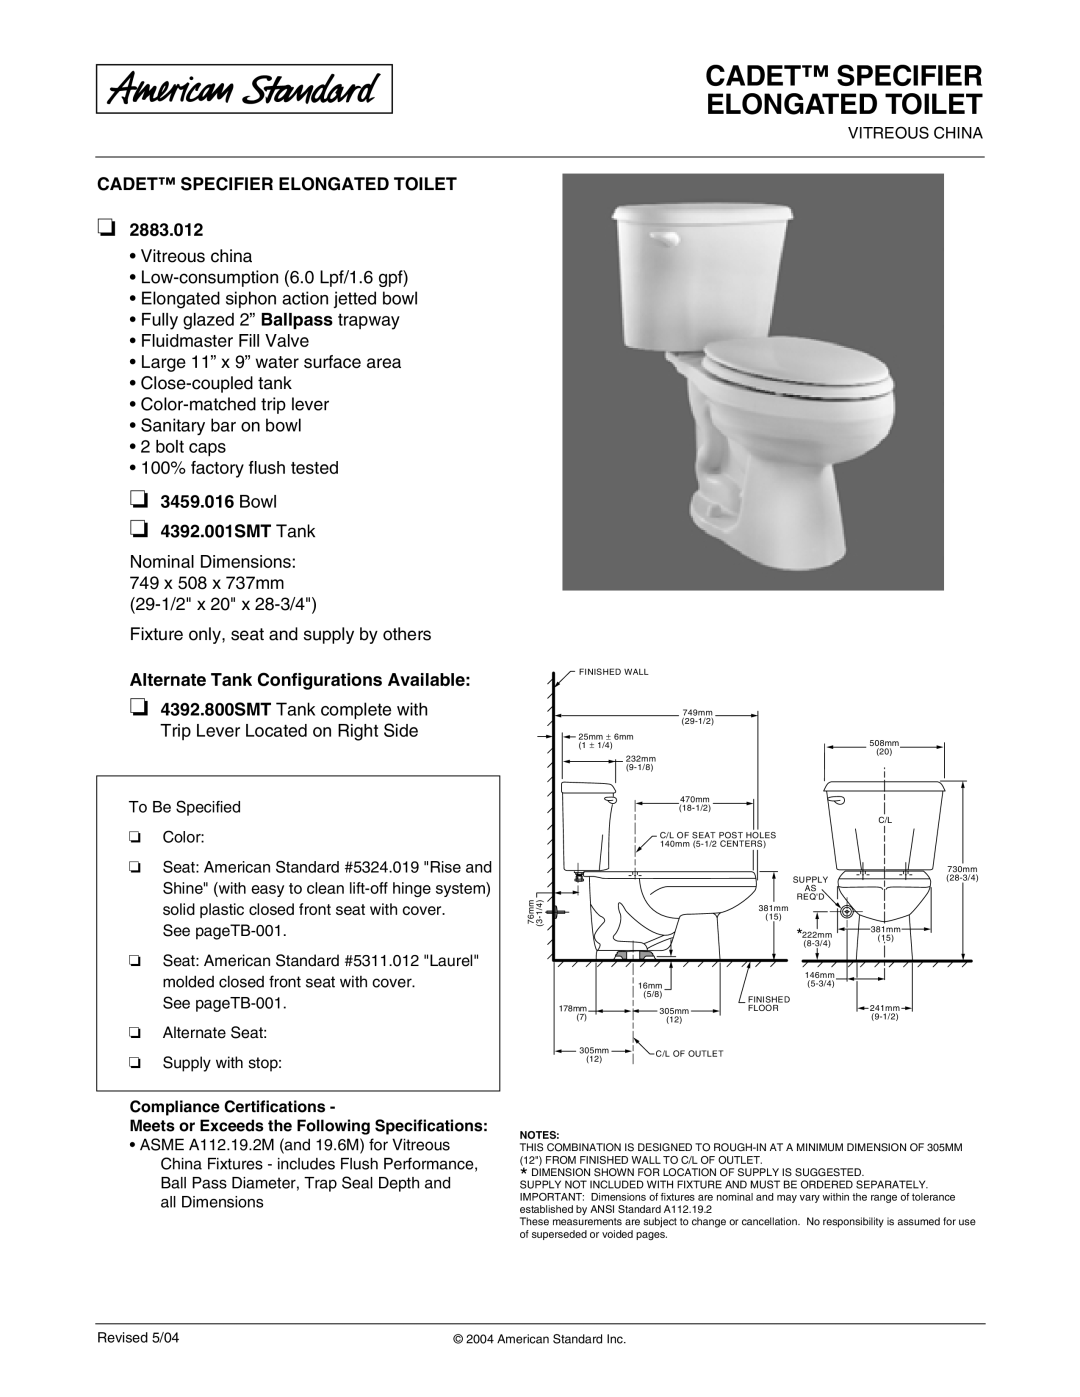 American Standard 4392.800SMT, 2883.012 dimensions Cadet Specifier Elongated Toilet, Bowl 4392.001SMT Tank 